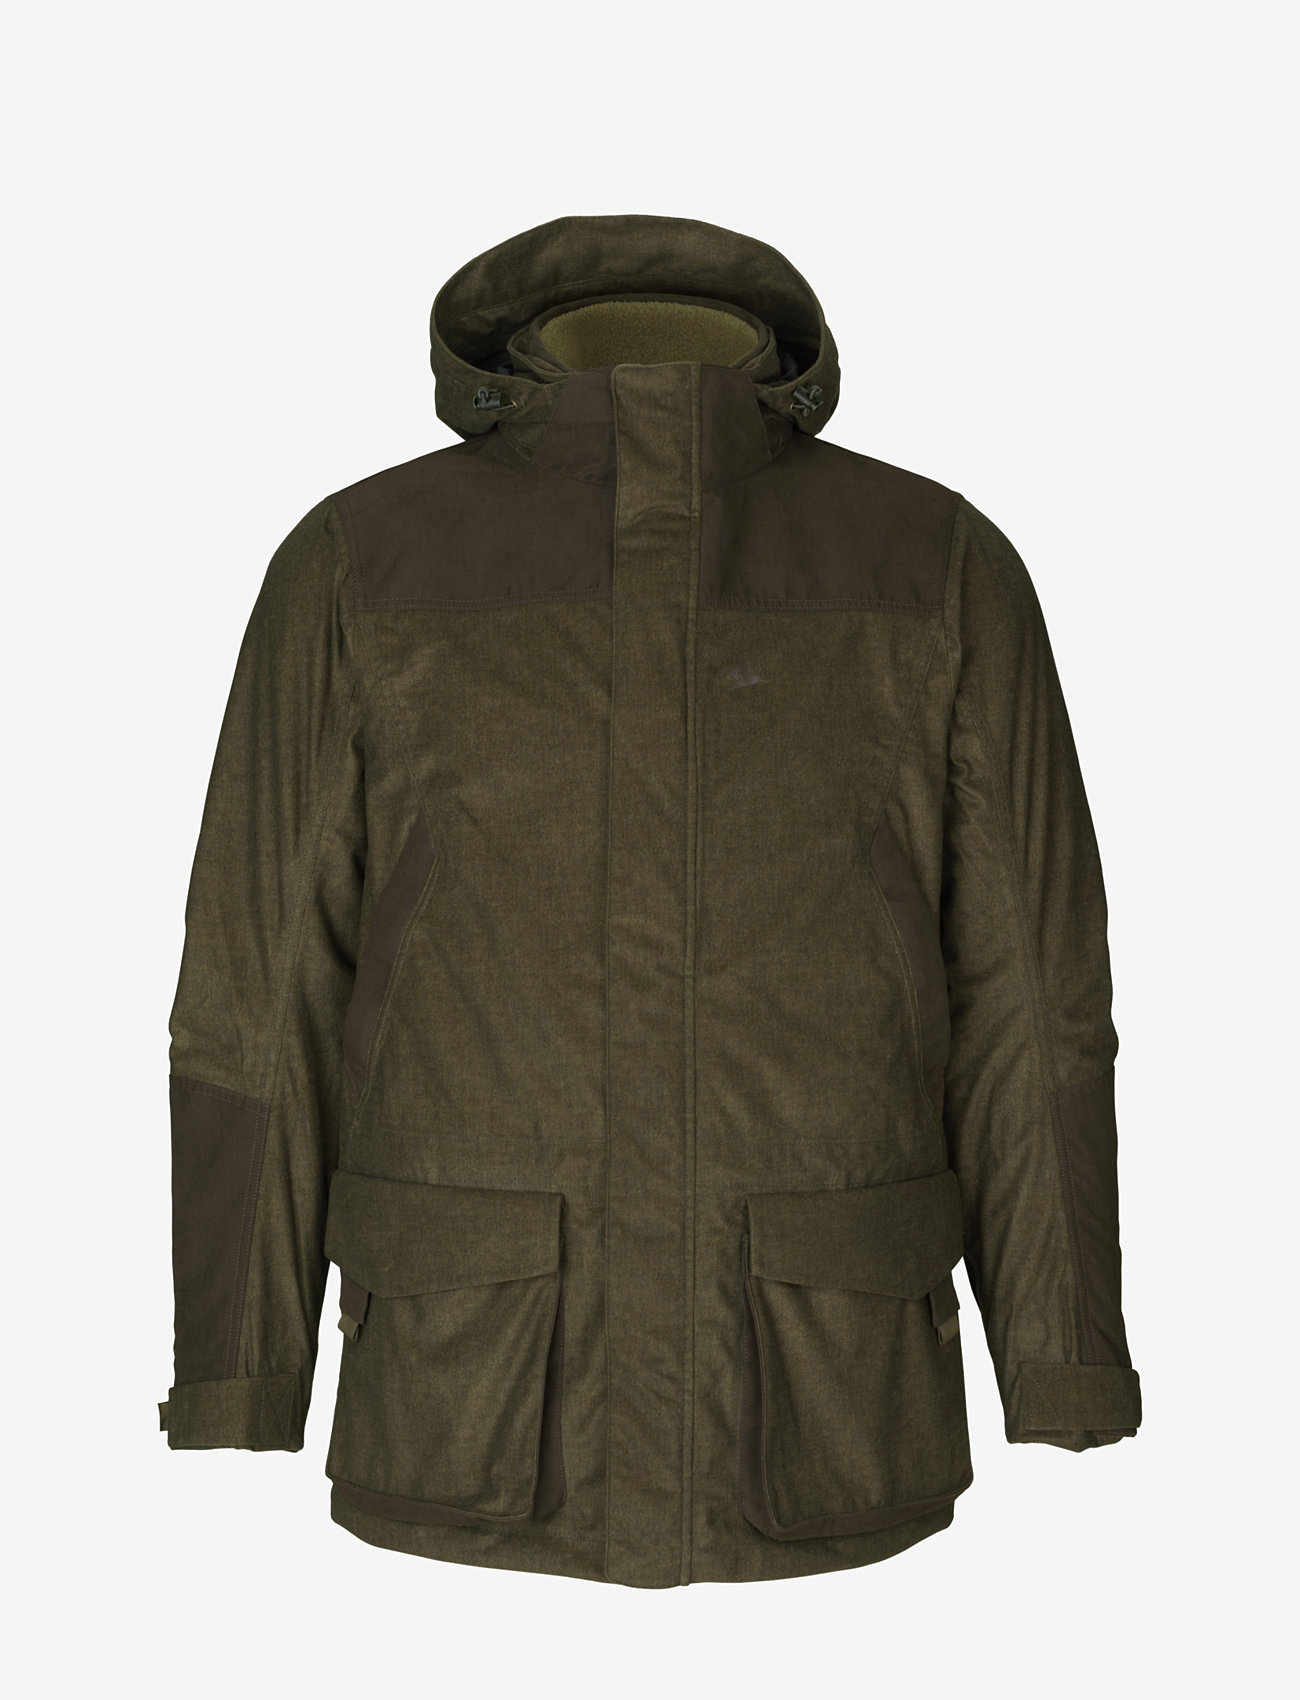 Seeland - North jacket - talvitakit - pine green - 0